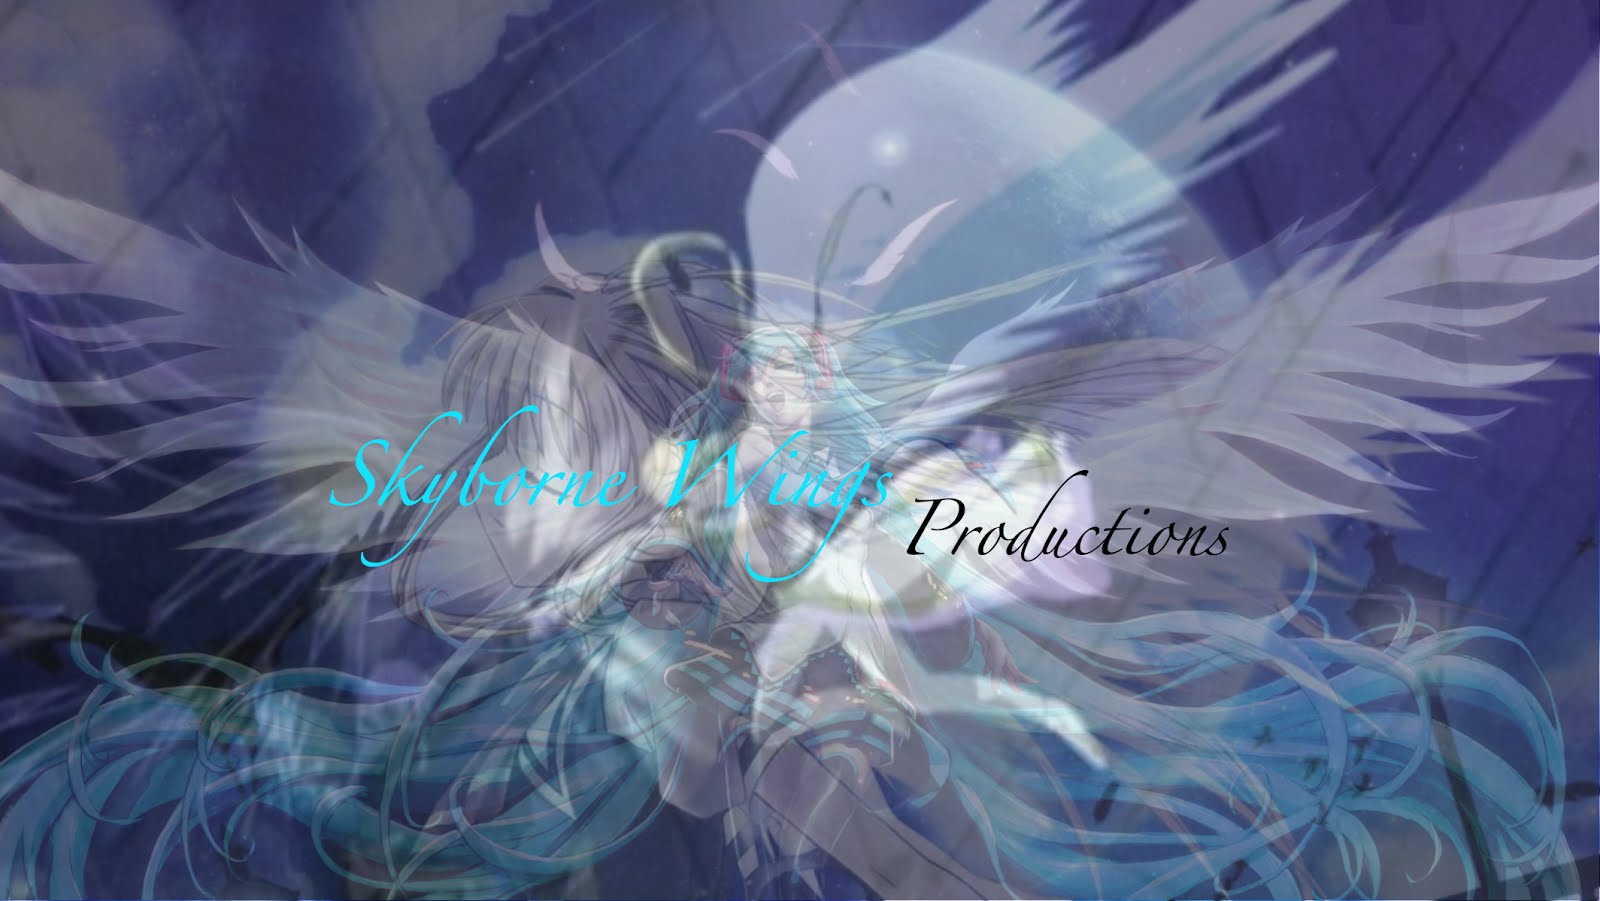 Skyborne Wings Productions